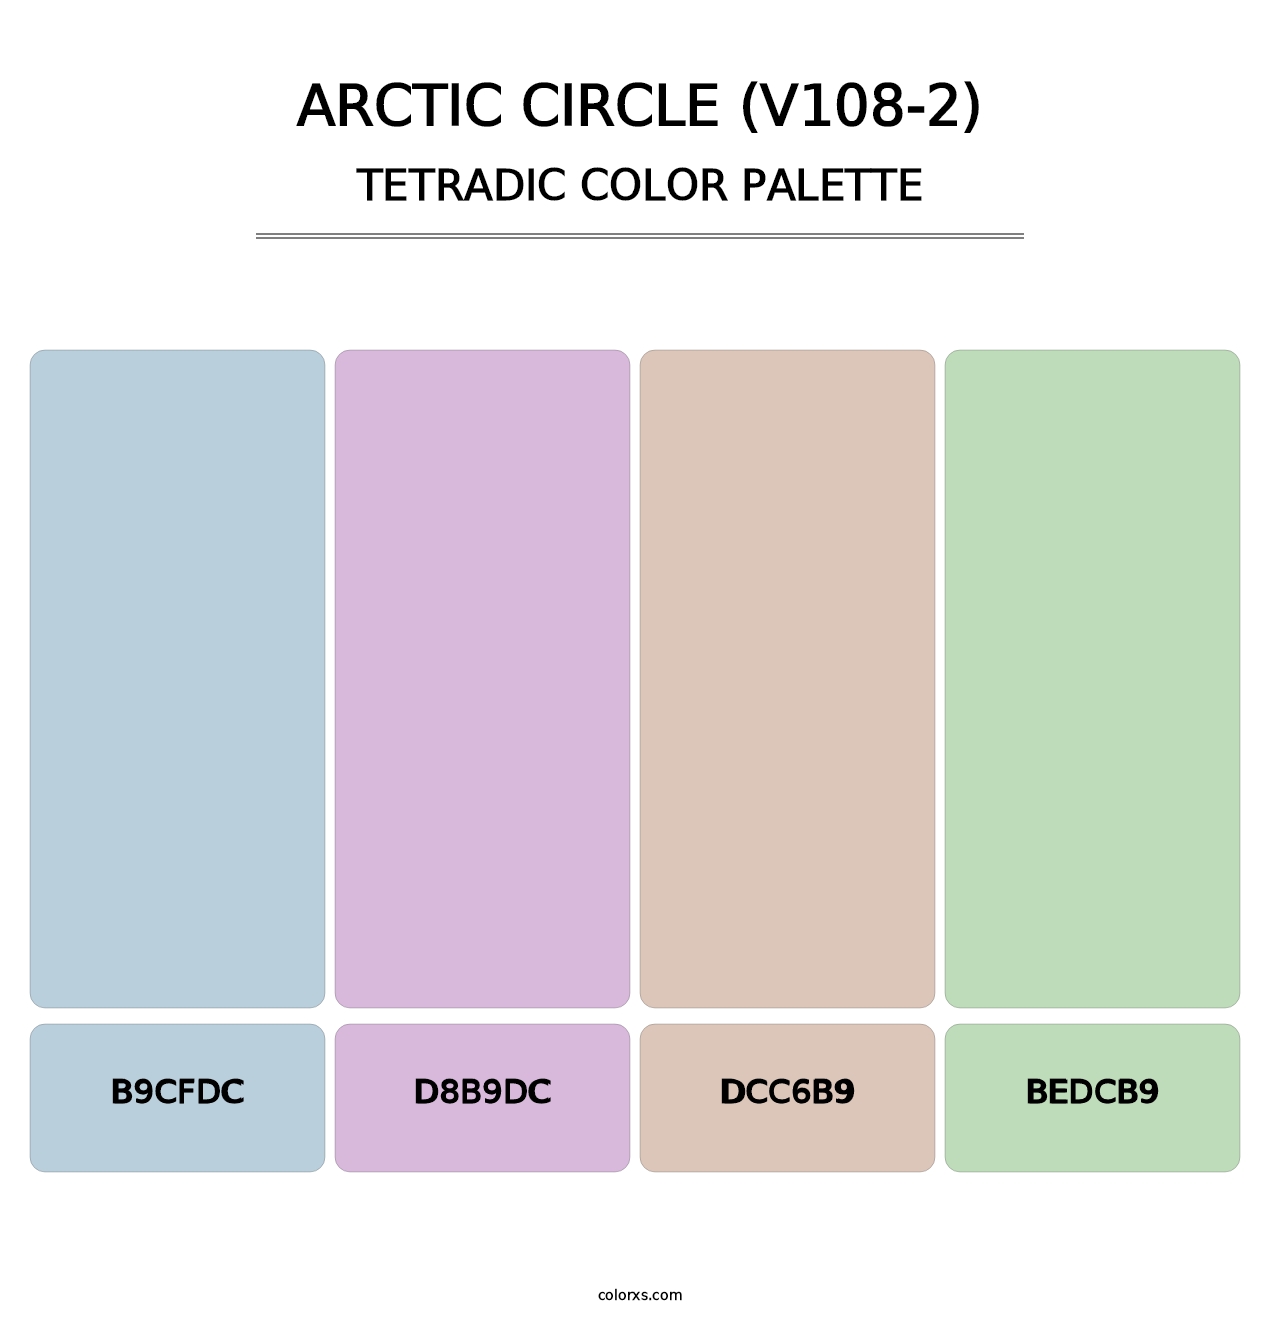 Arctic Circle (V108-2) - Tetradic Color Palette